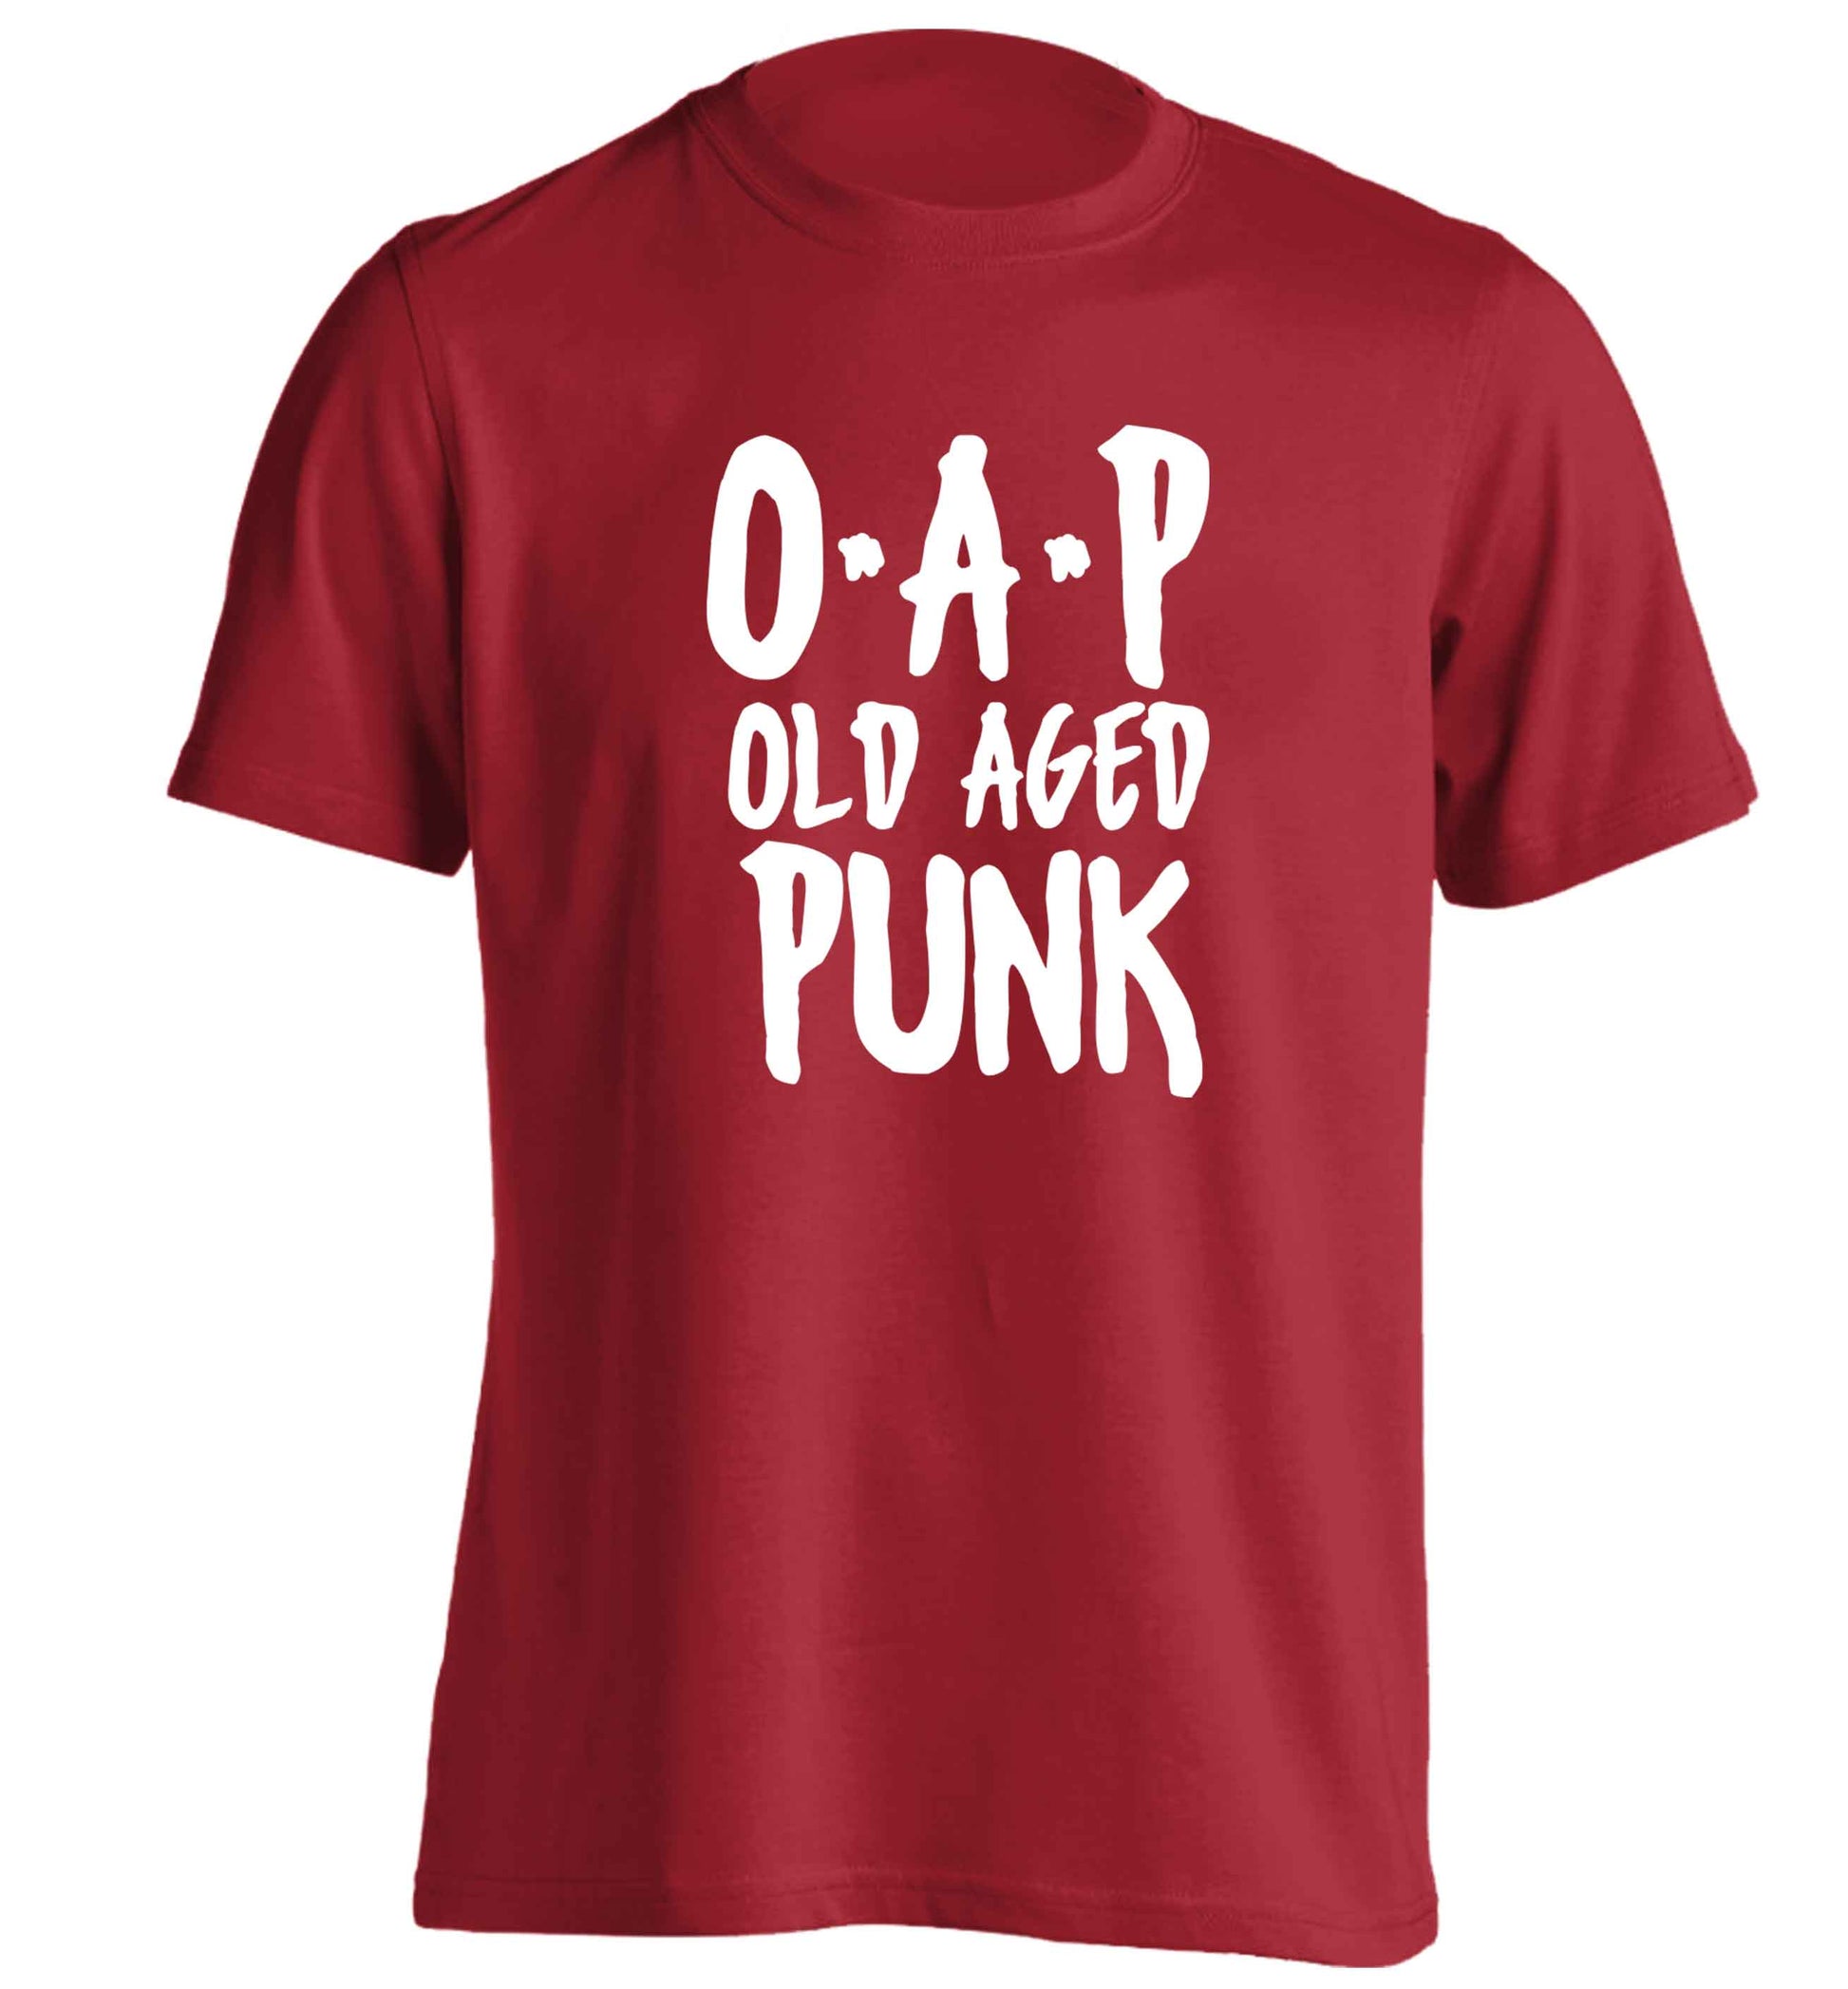 O.A.P Old Age Punk adults unisex red Tshirt 2XL